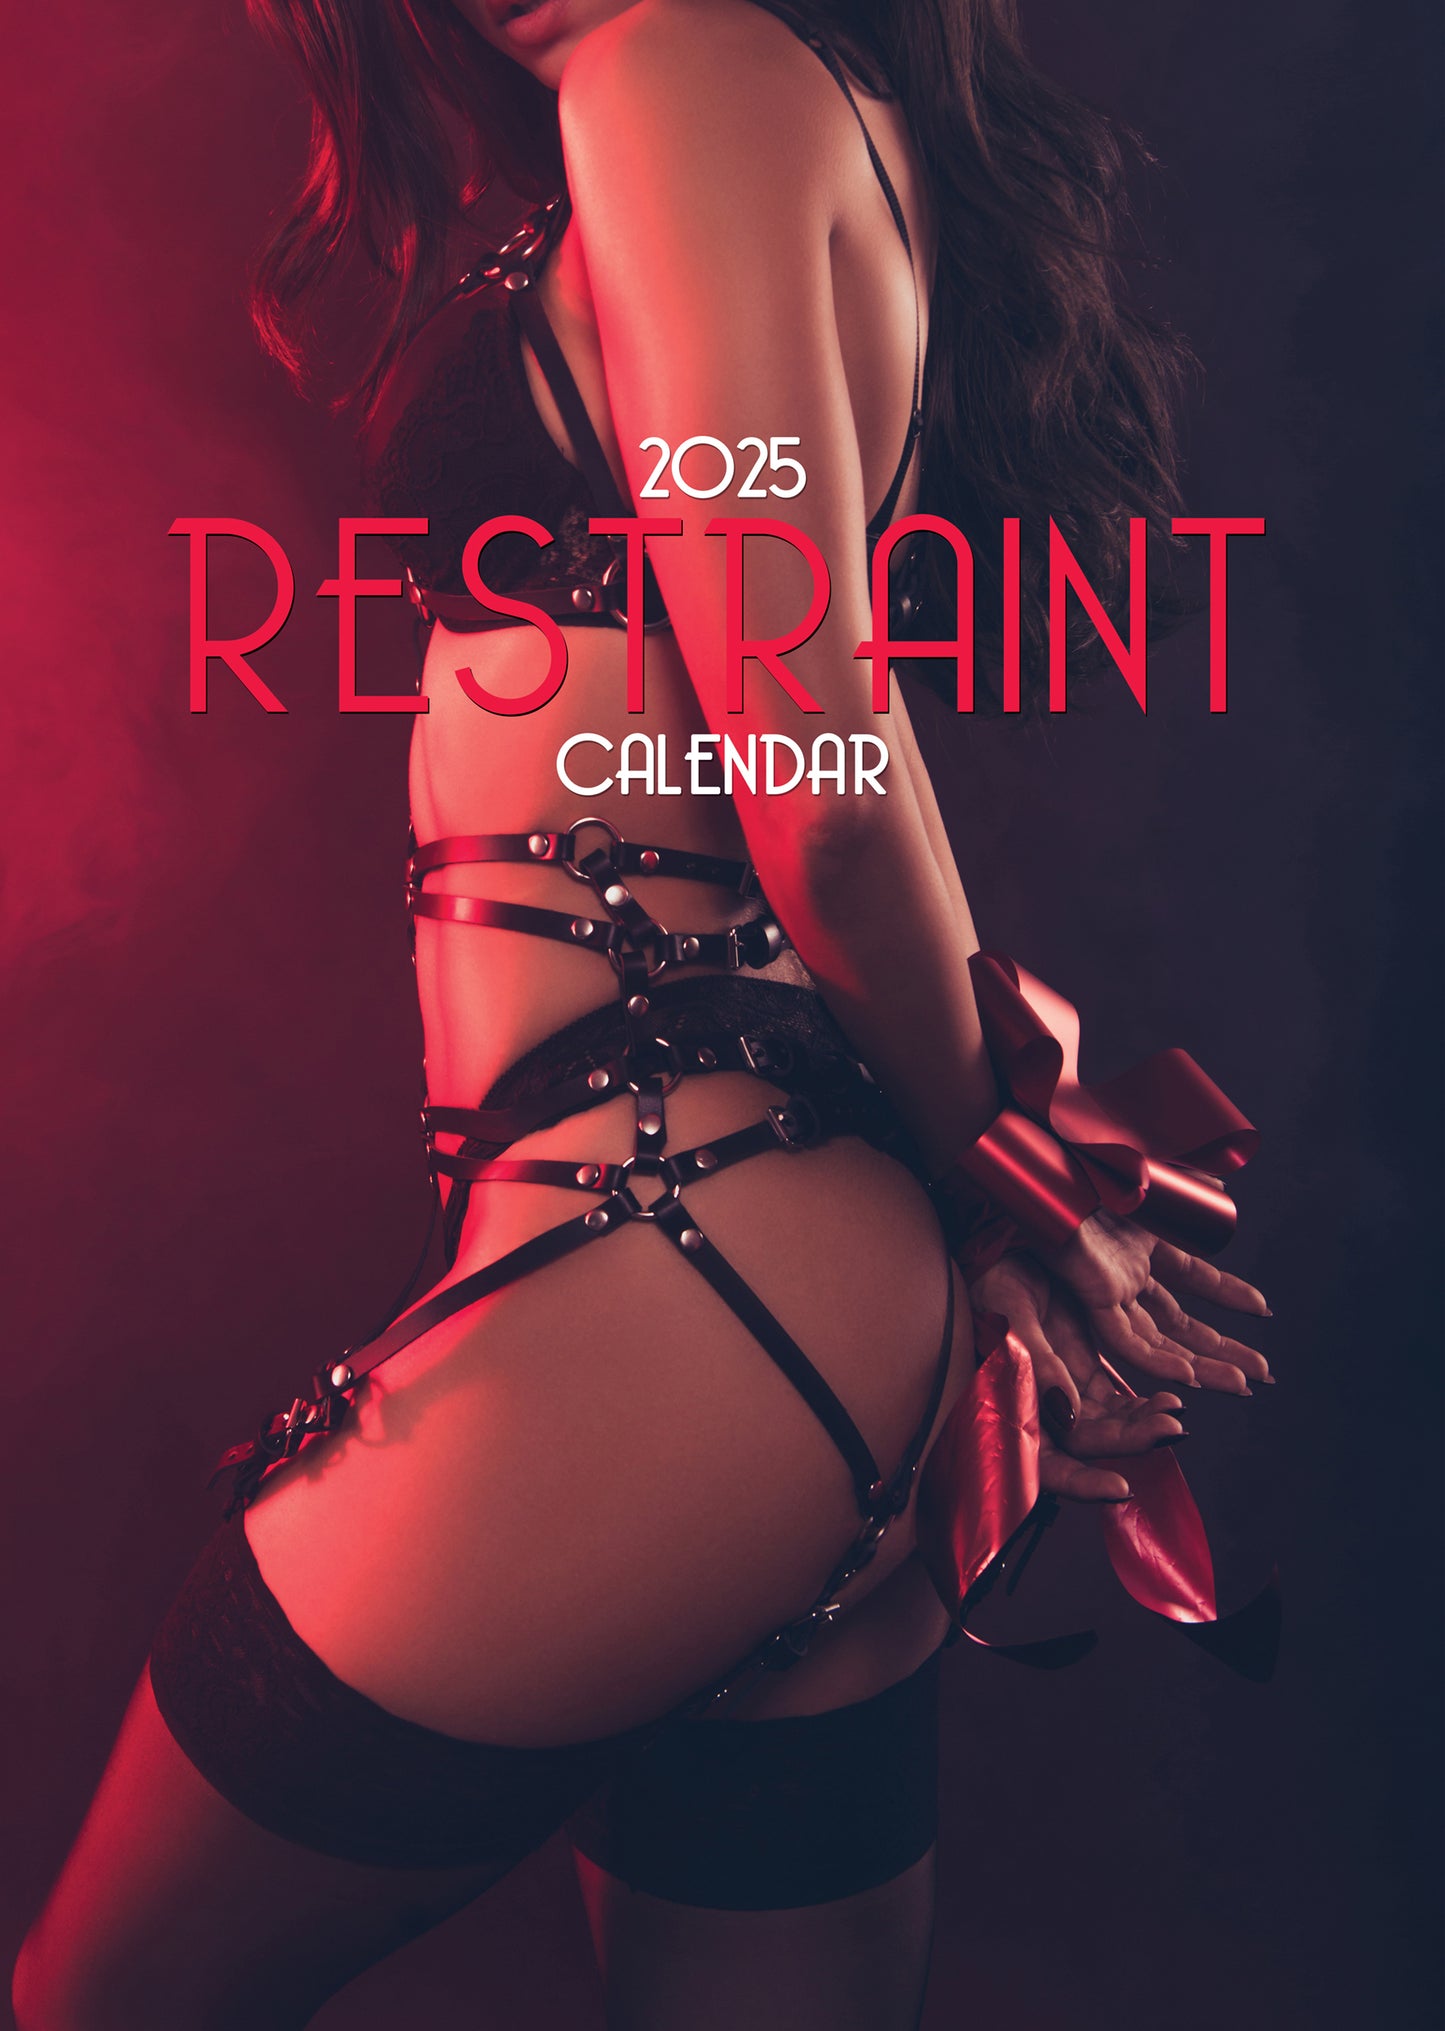 Restraint Calendar 2025 CalendarsRus